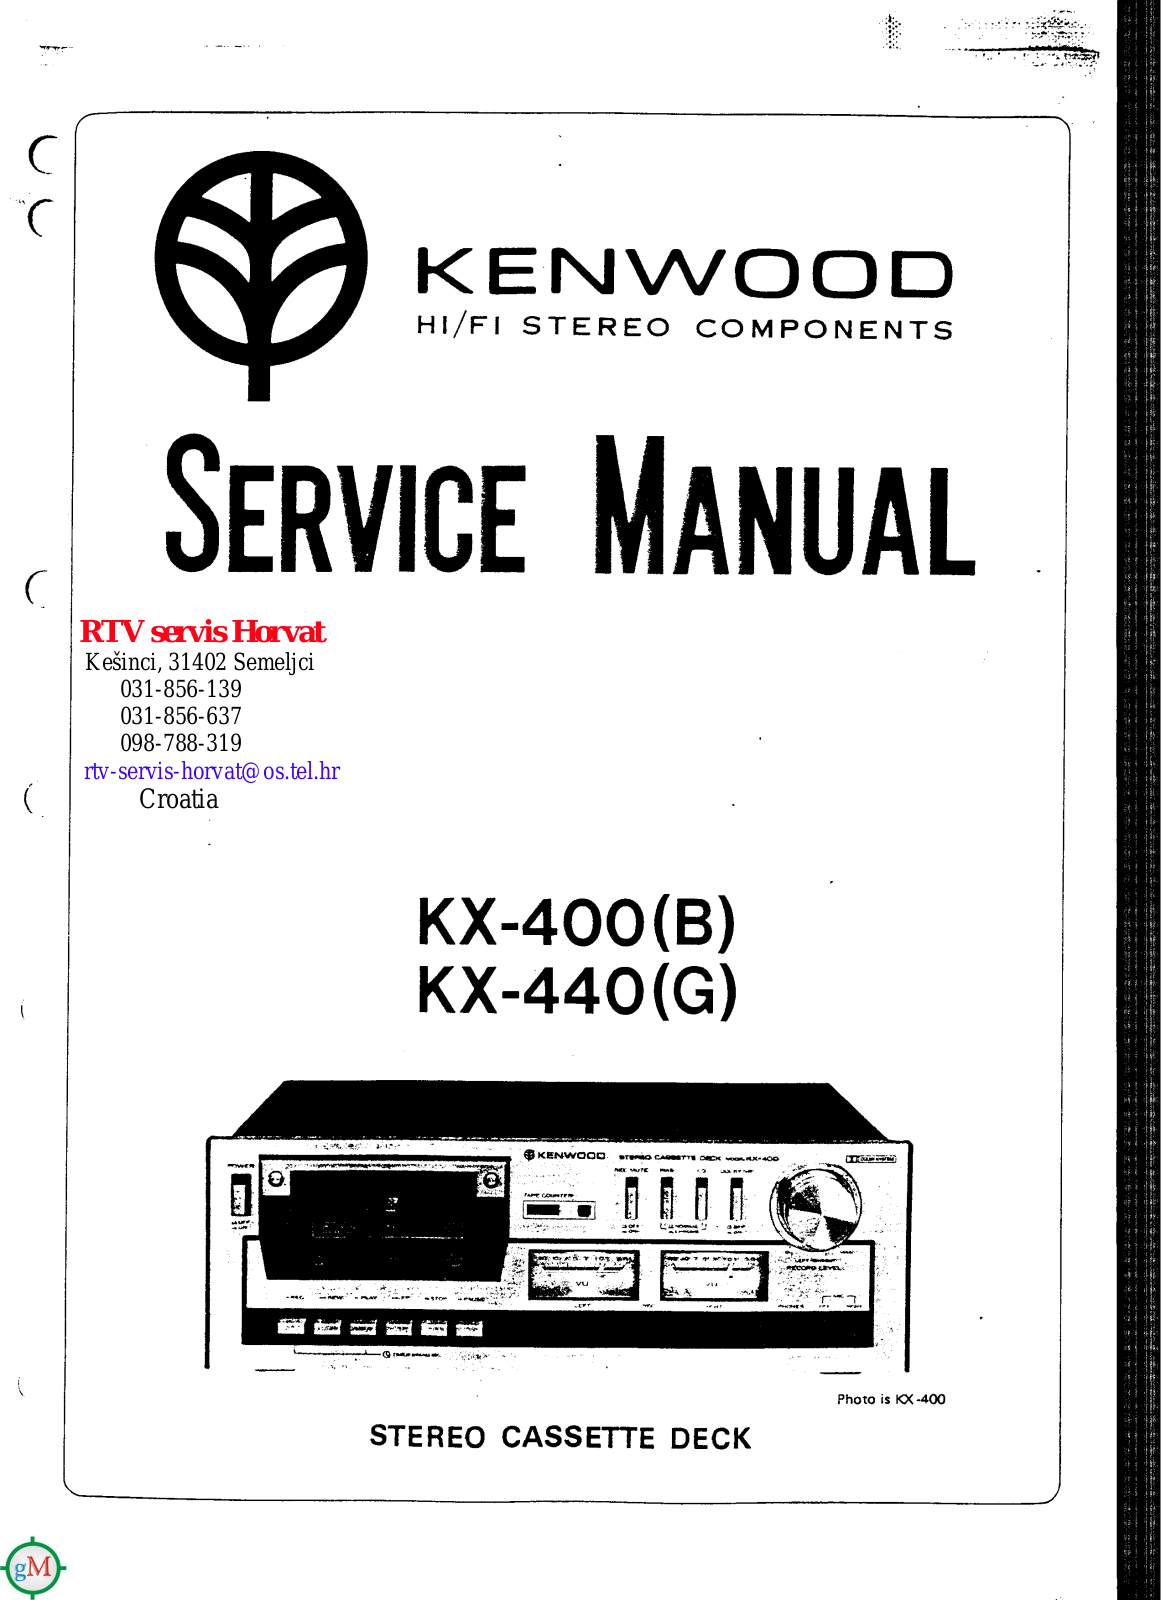 Kenwood KX-400, KX-440 Service manual